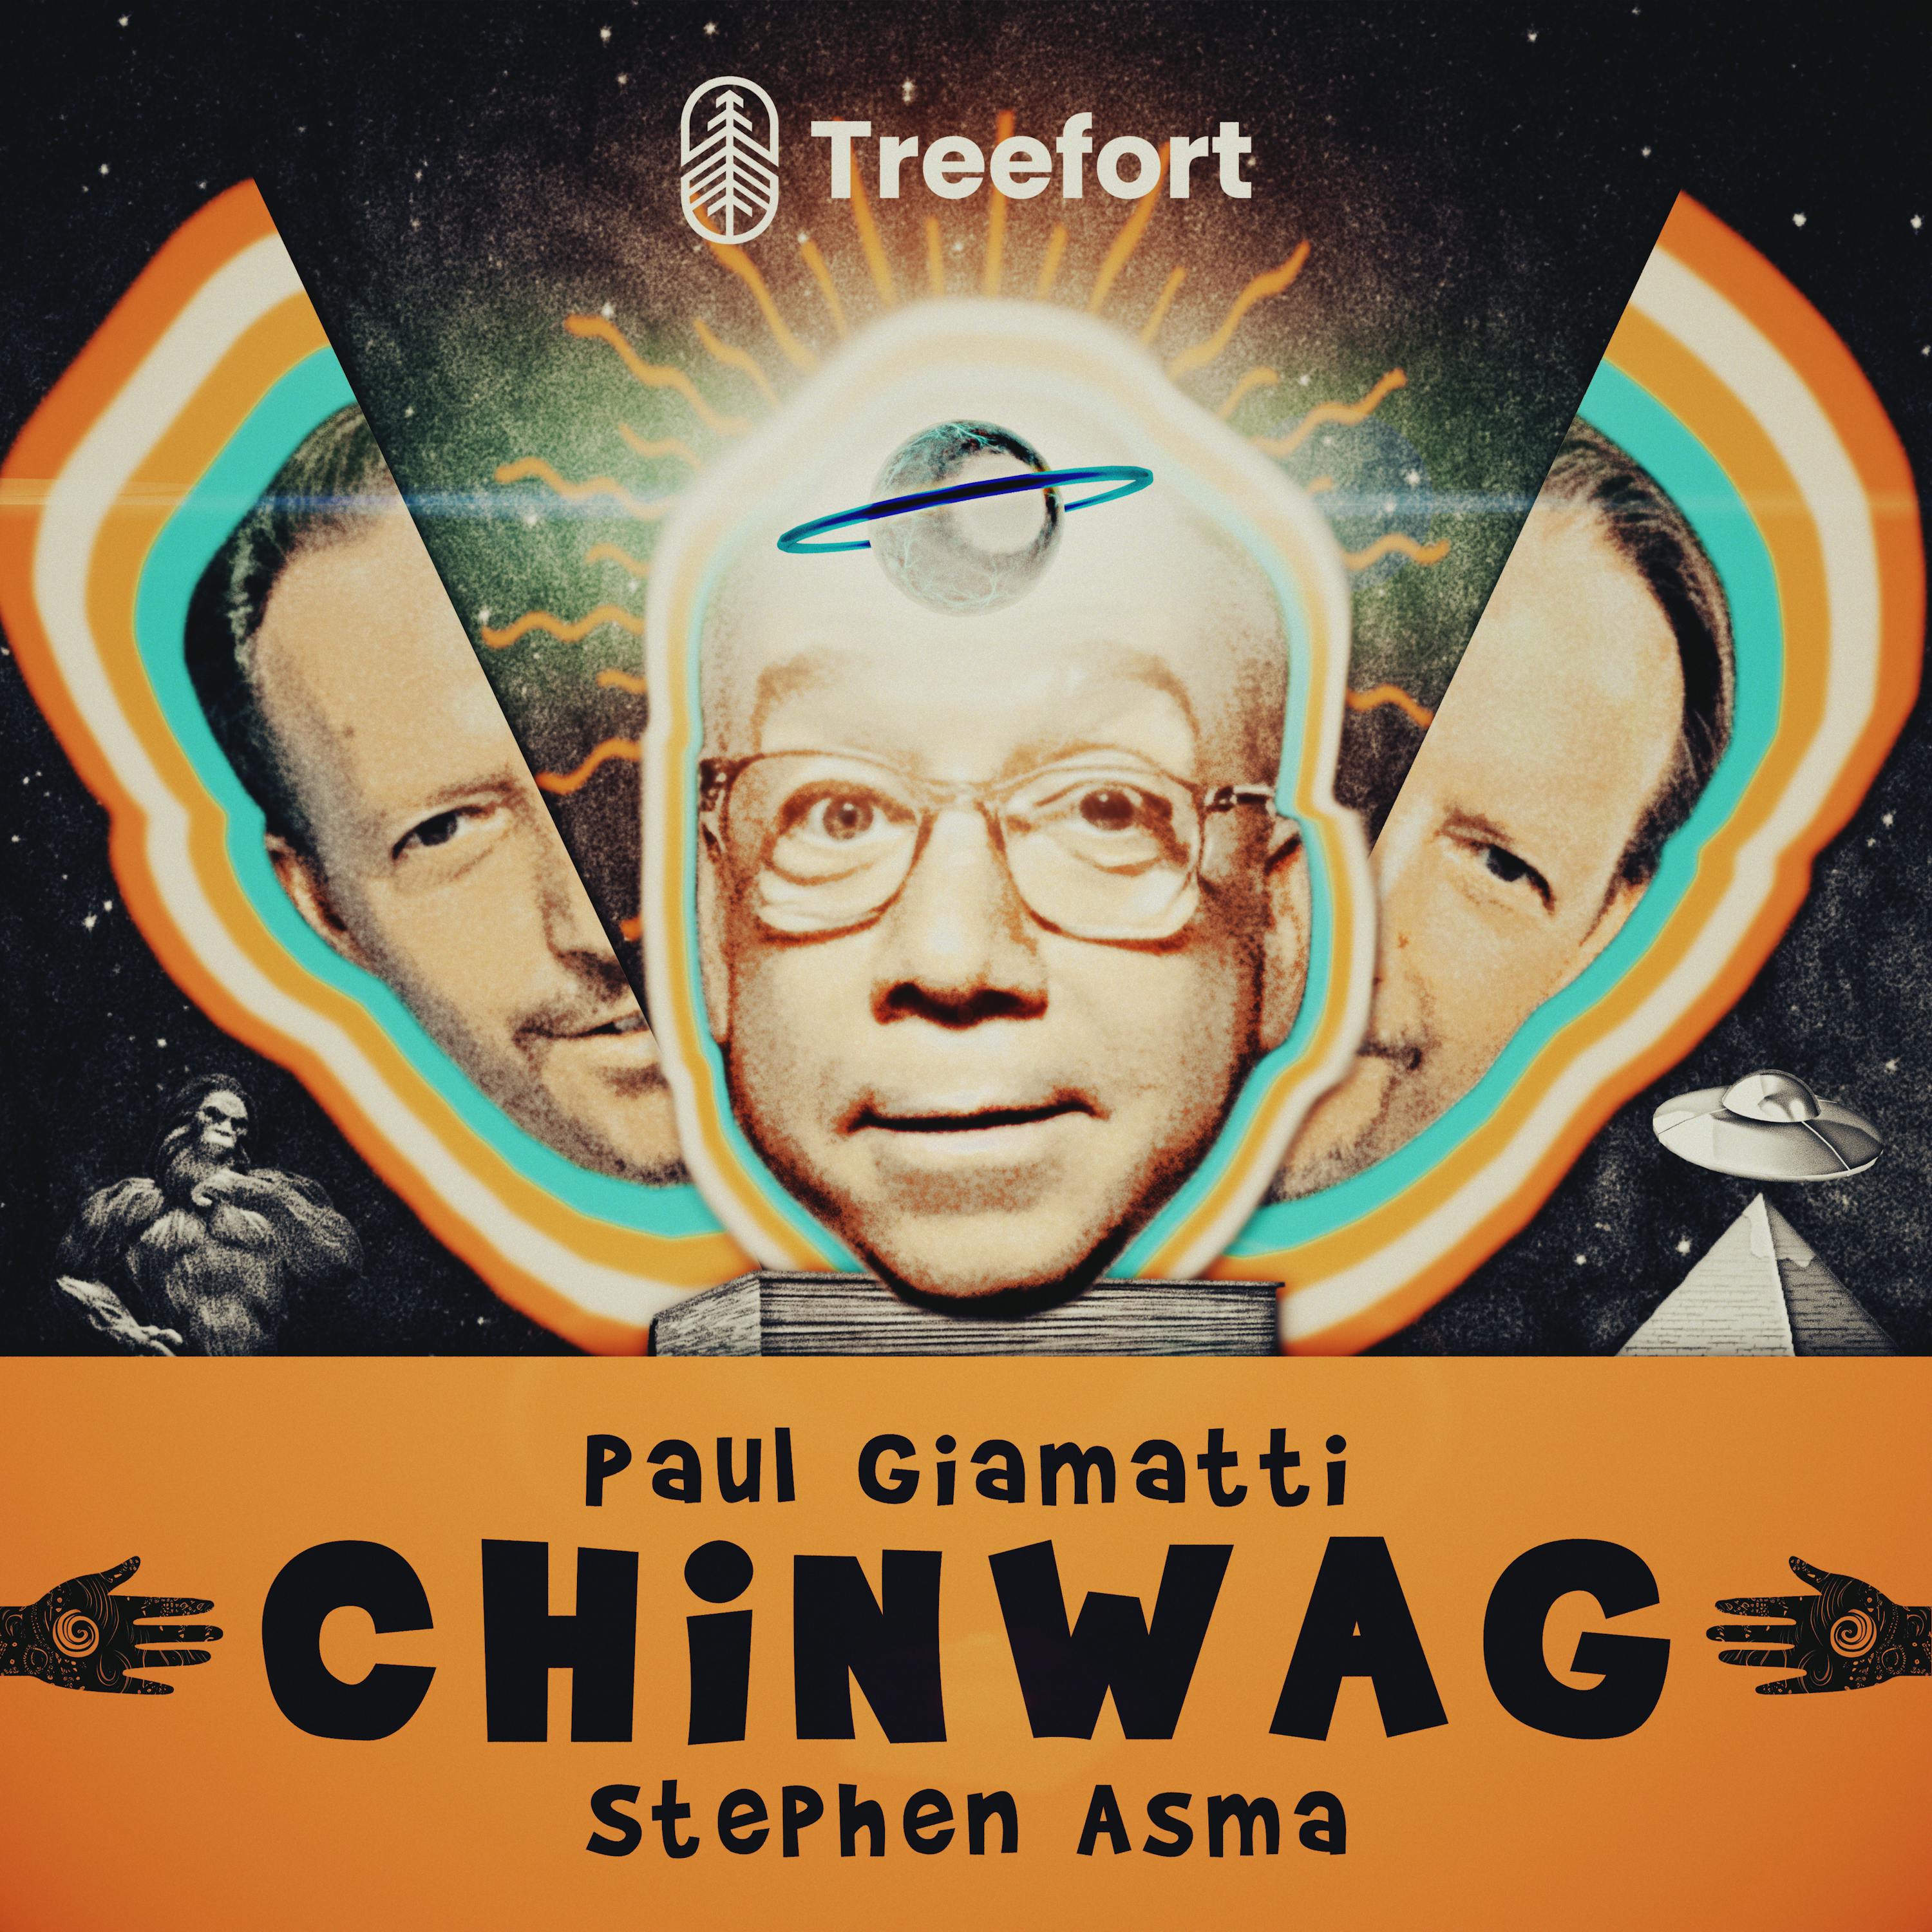 Paul Giamatti’s CHINWAG with Stephen Asma podcast show image